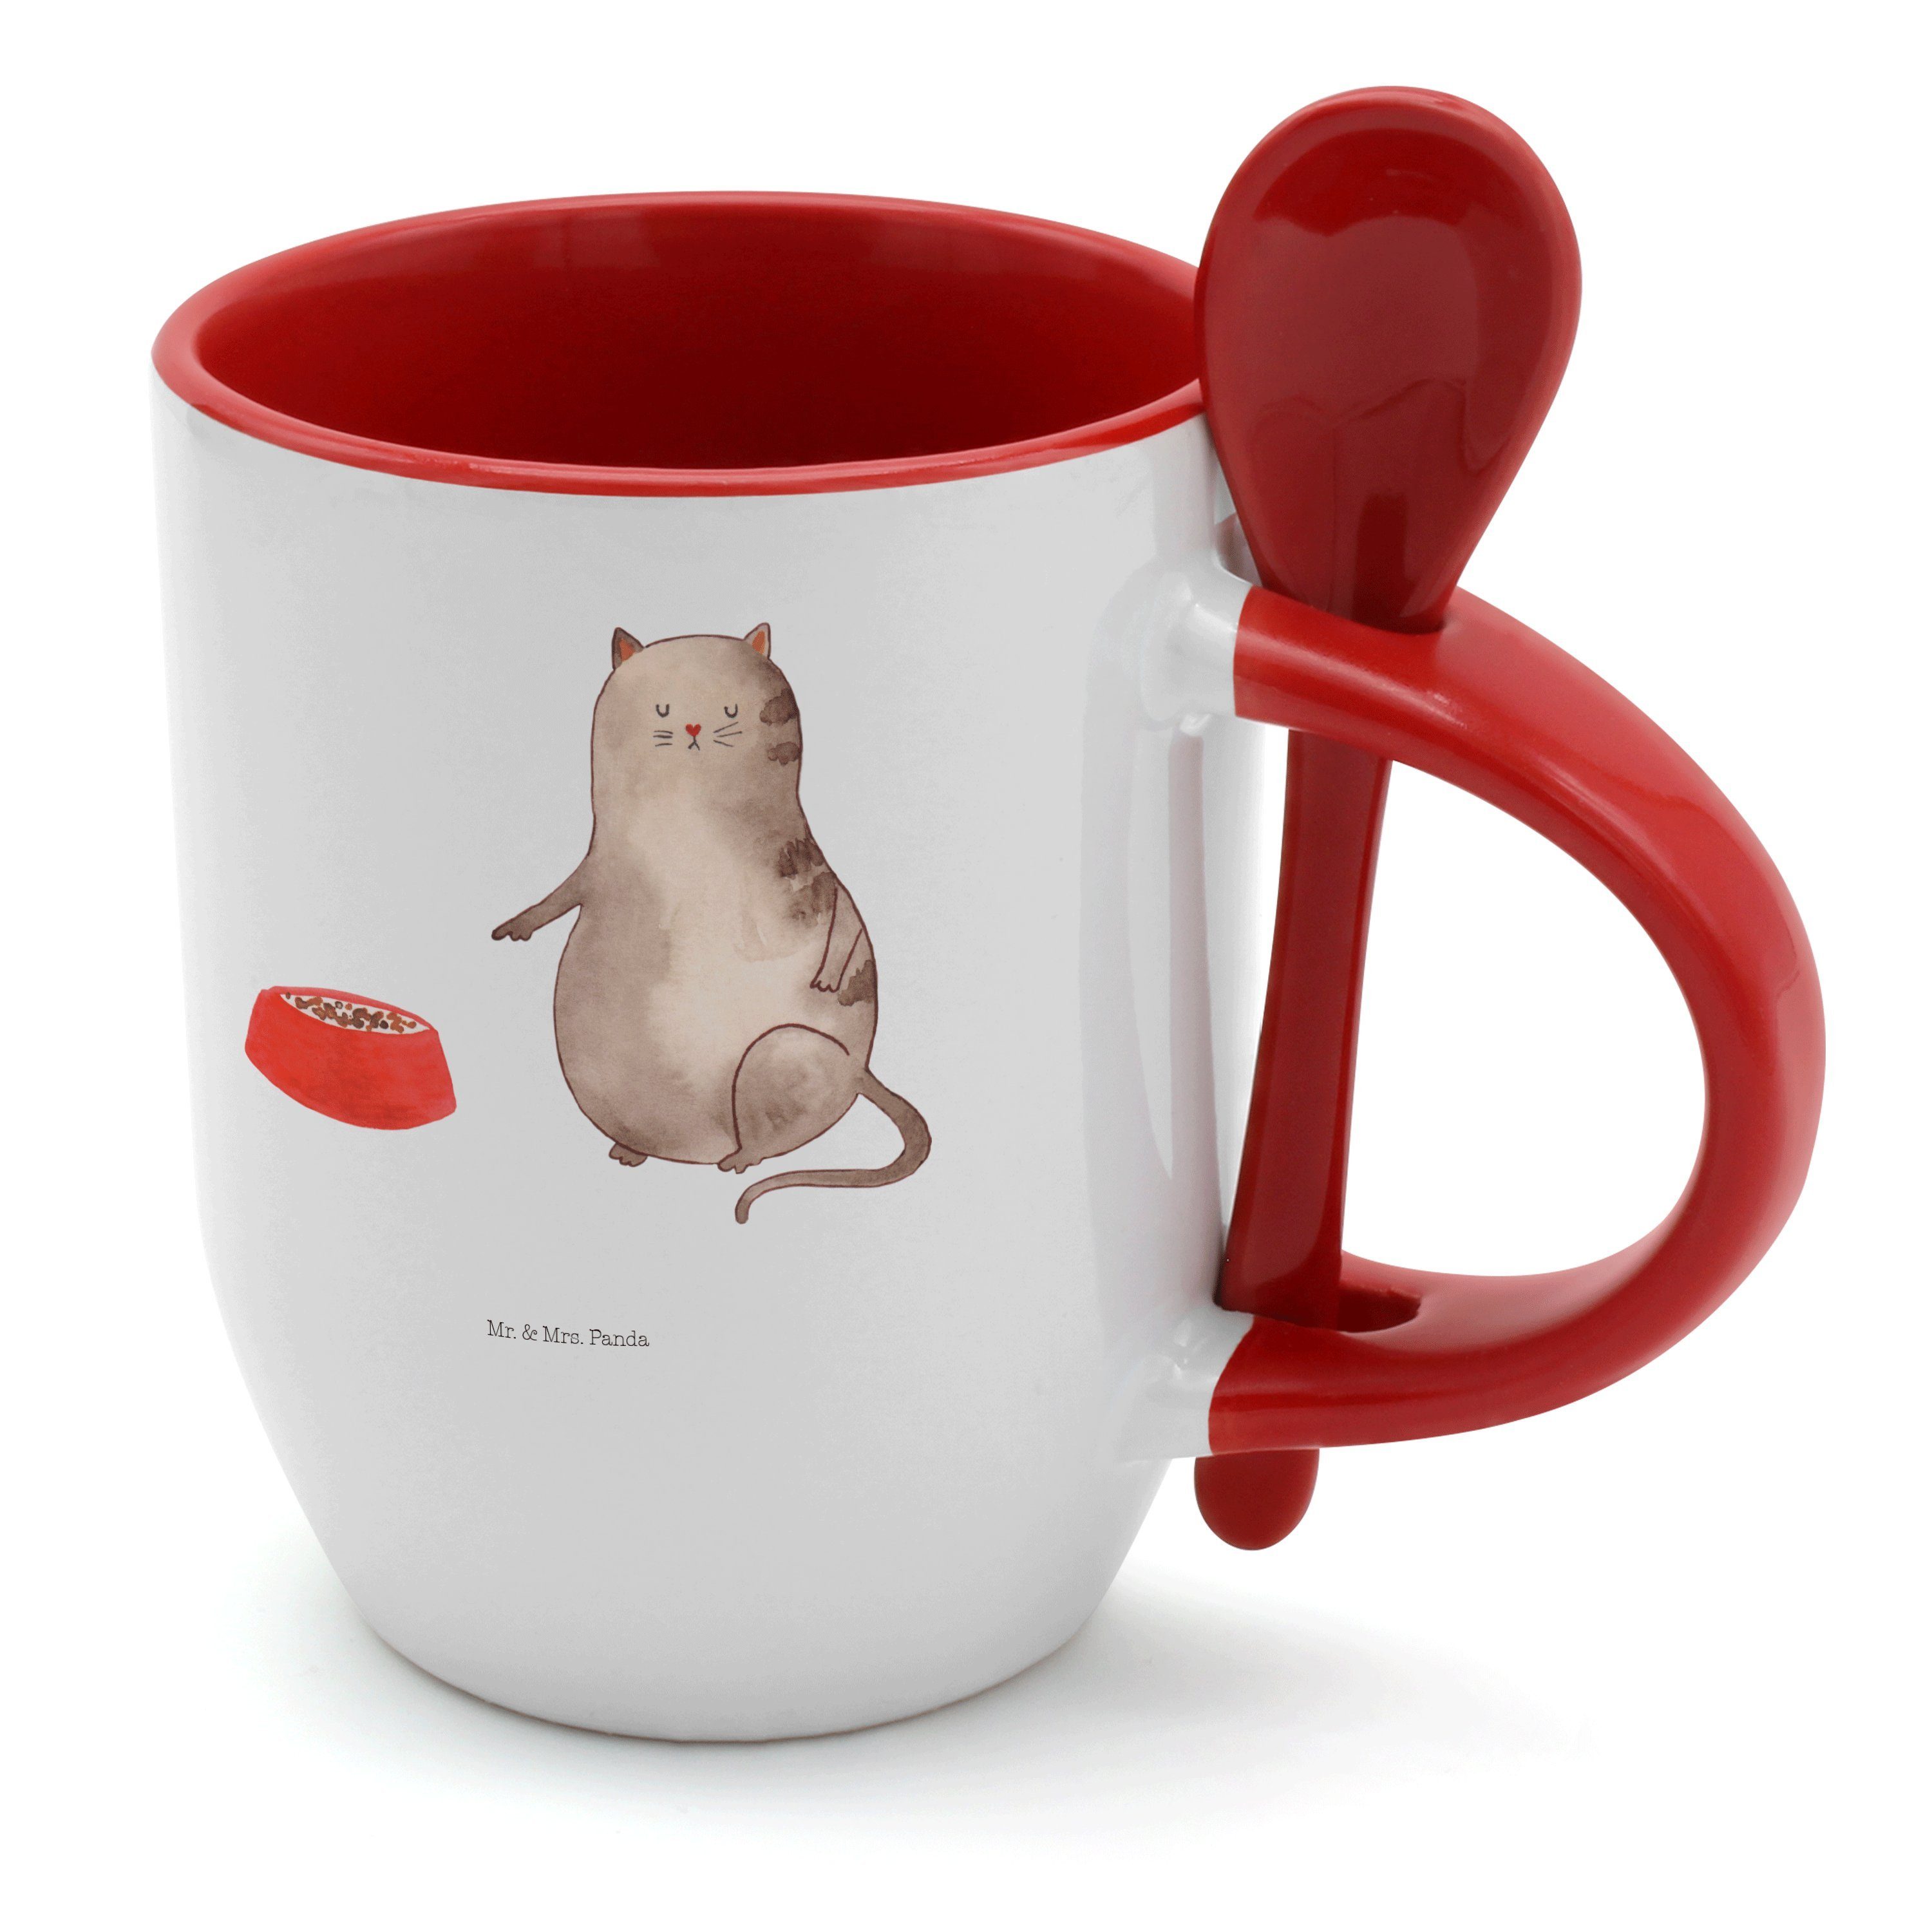 Mr. & Mrs. Panda Tasse Katze fressen - Weiß - Geschenk, Tasse, Kaffeebecher, Katzenmotive, K, Keramik | Tassen